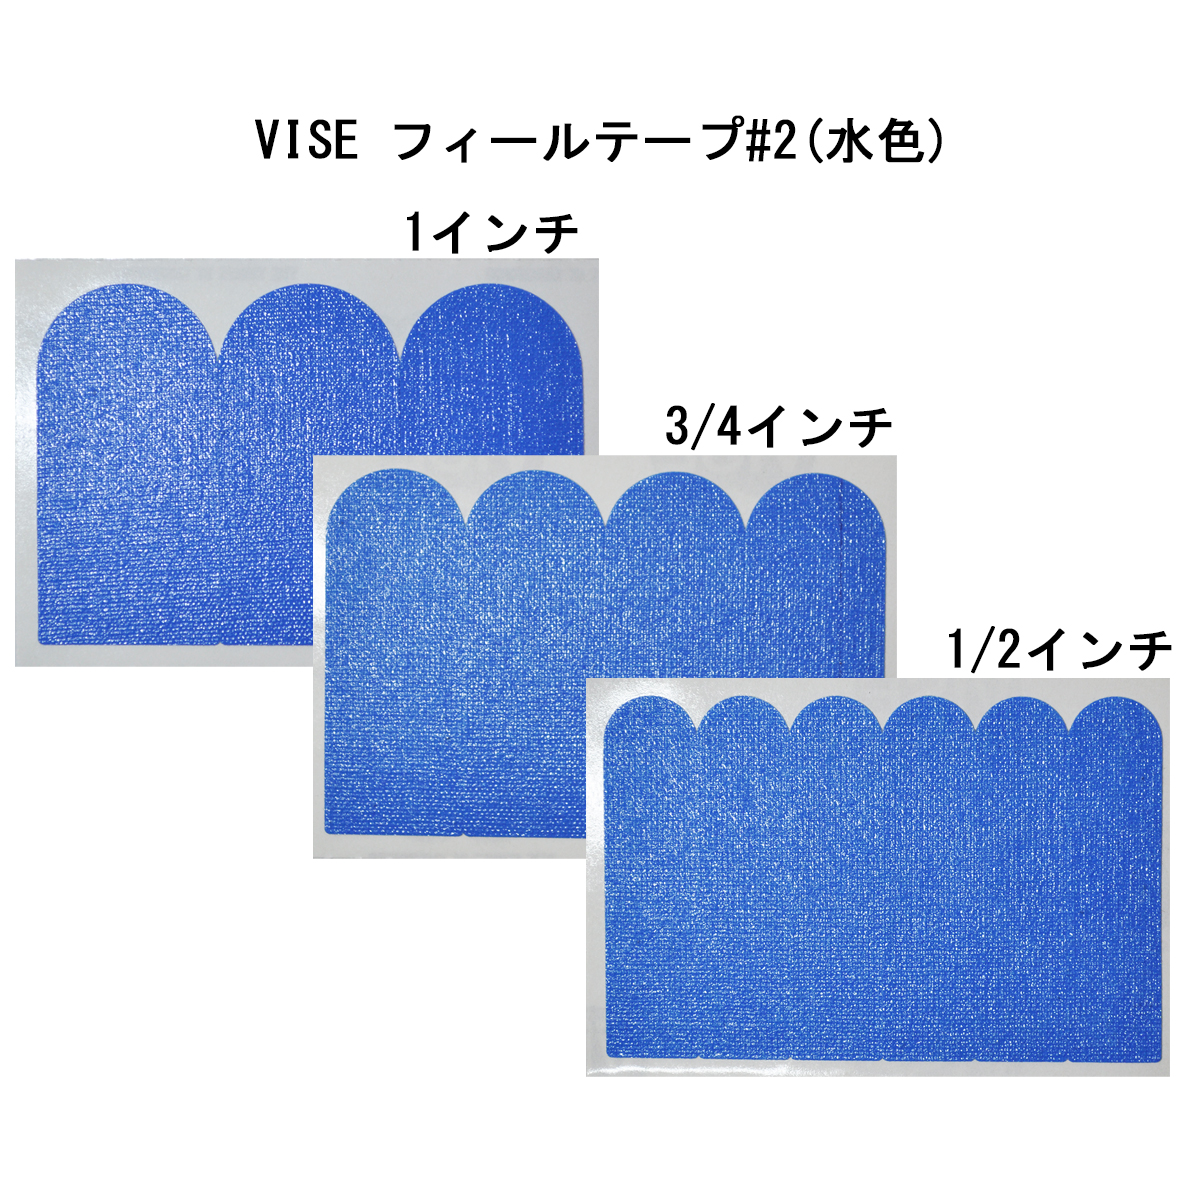 VISE フィールテープ#2(水色)